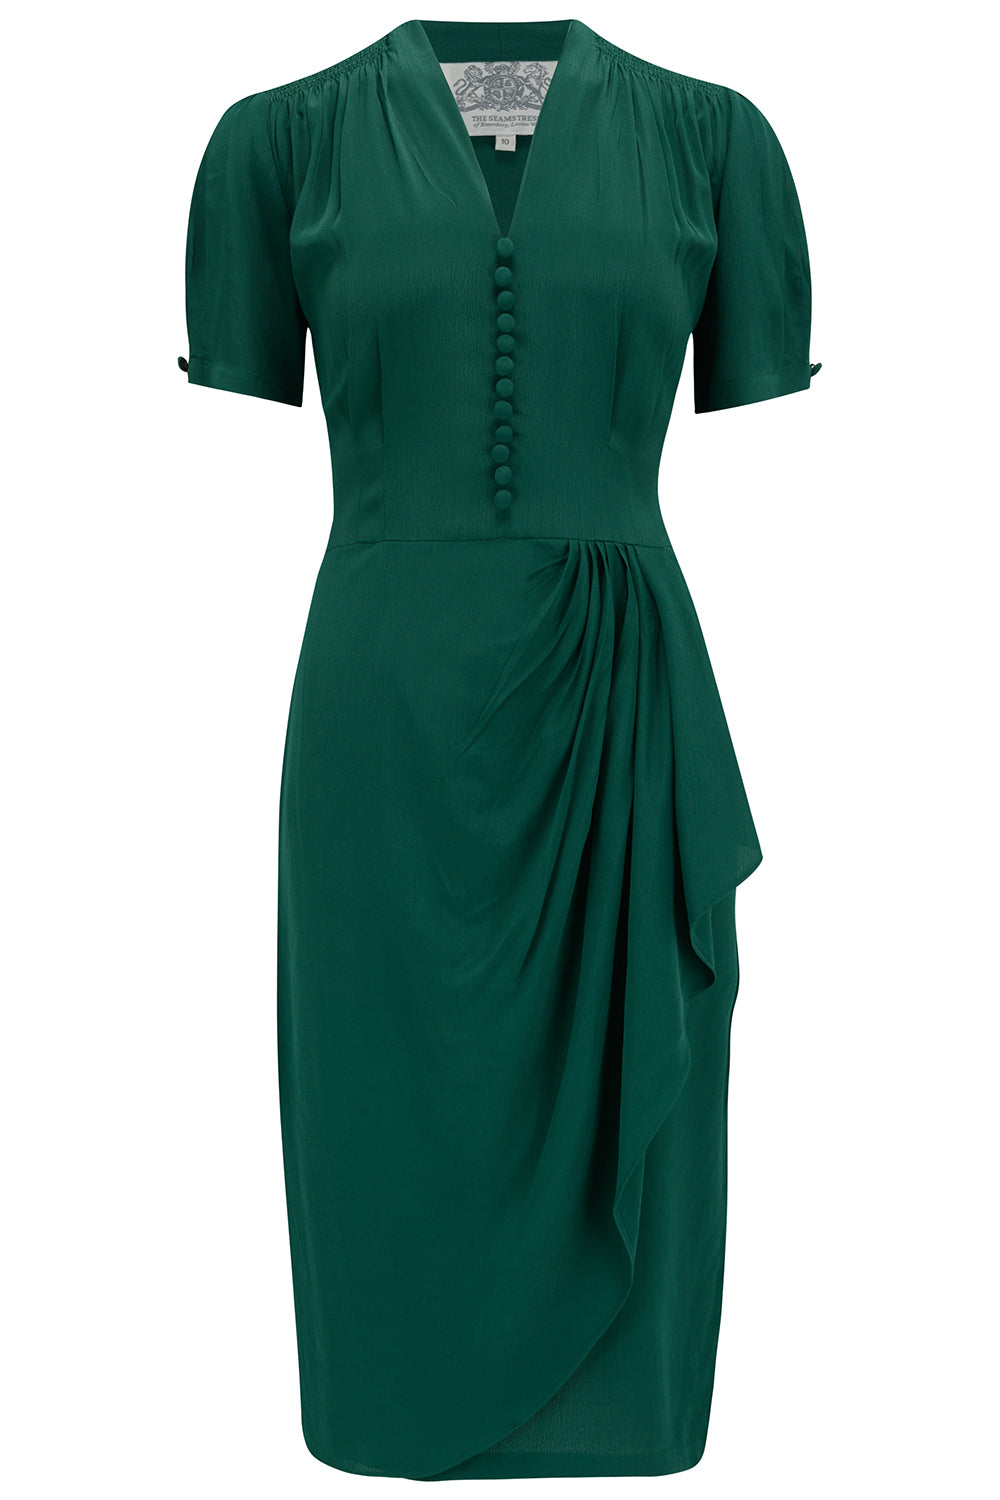 Vintage Dresses & Clothing UK Mabel Dress in Solid Green  A Classic 1940s True Vintage Inspired Style £79.00 AT vintagedancer.com